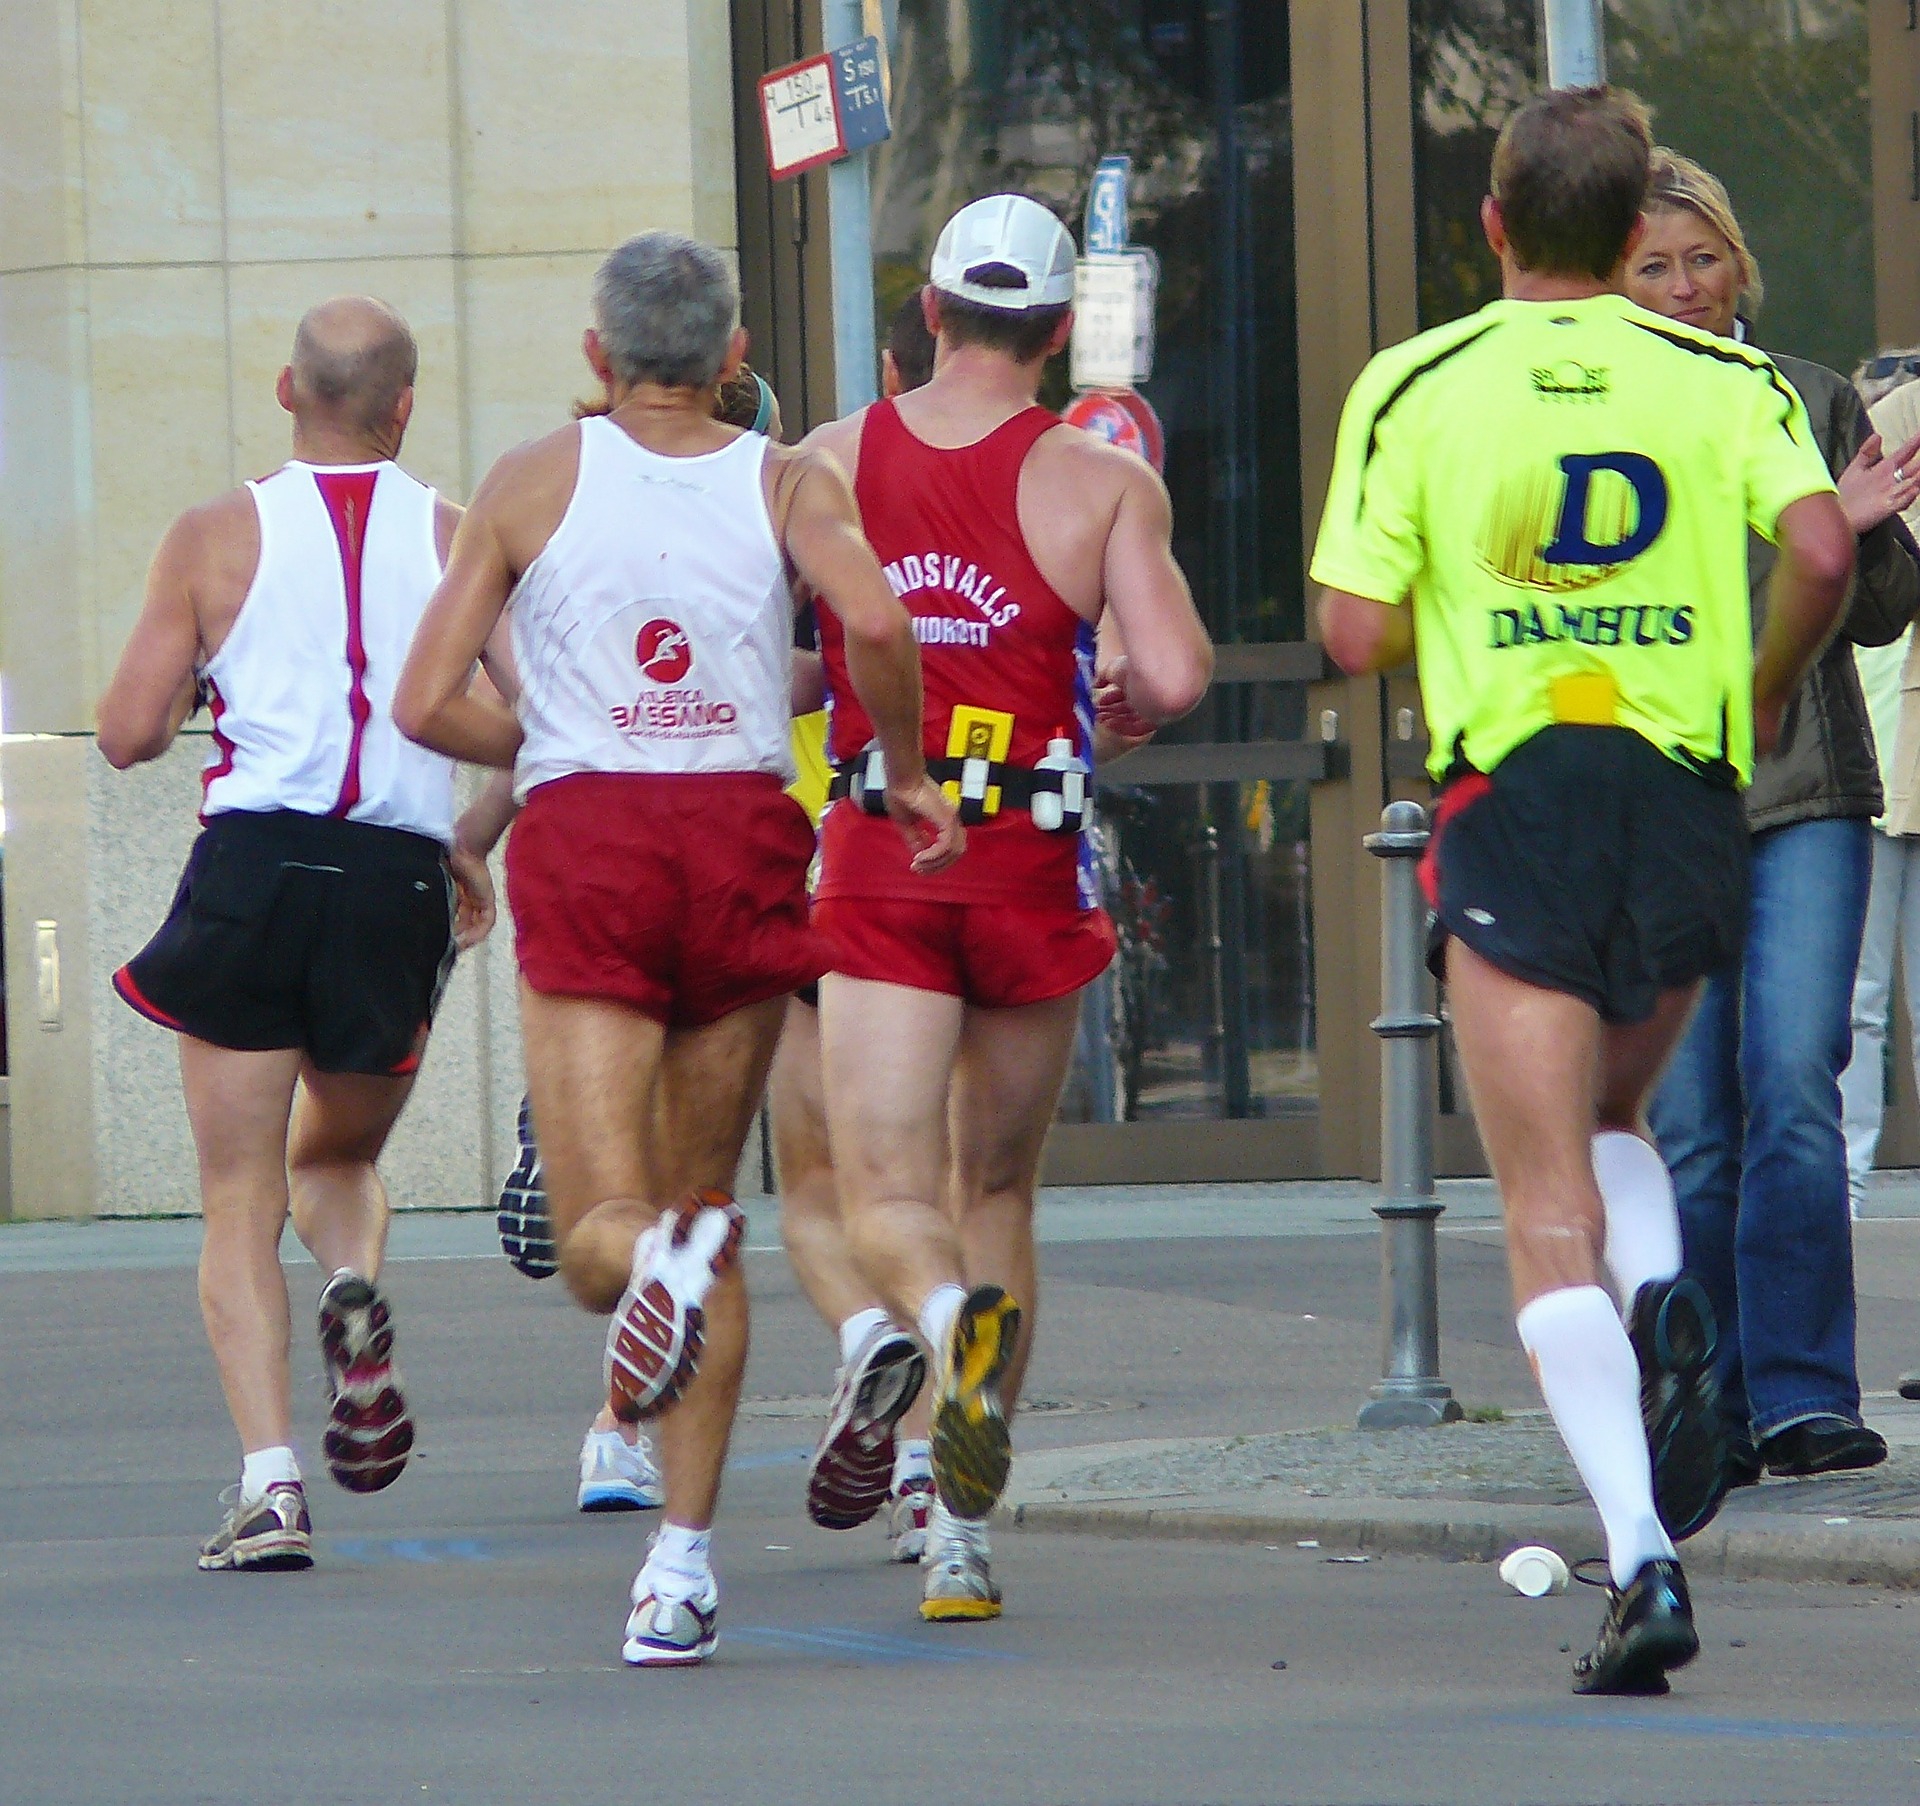 Joggers, runners, men